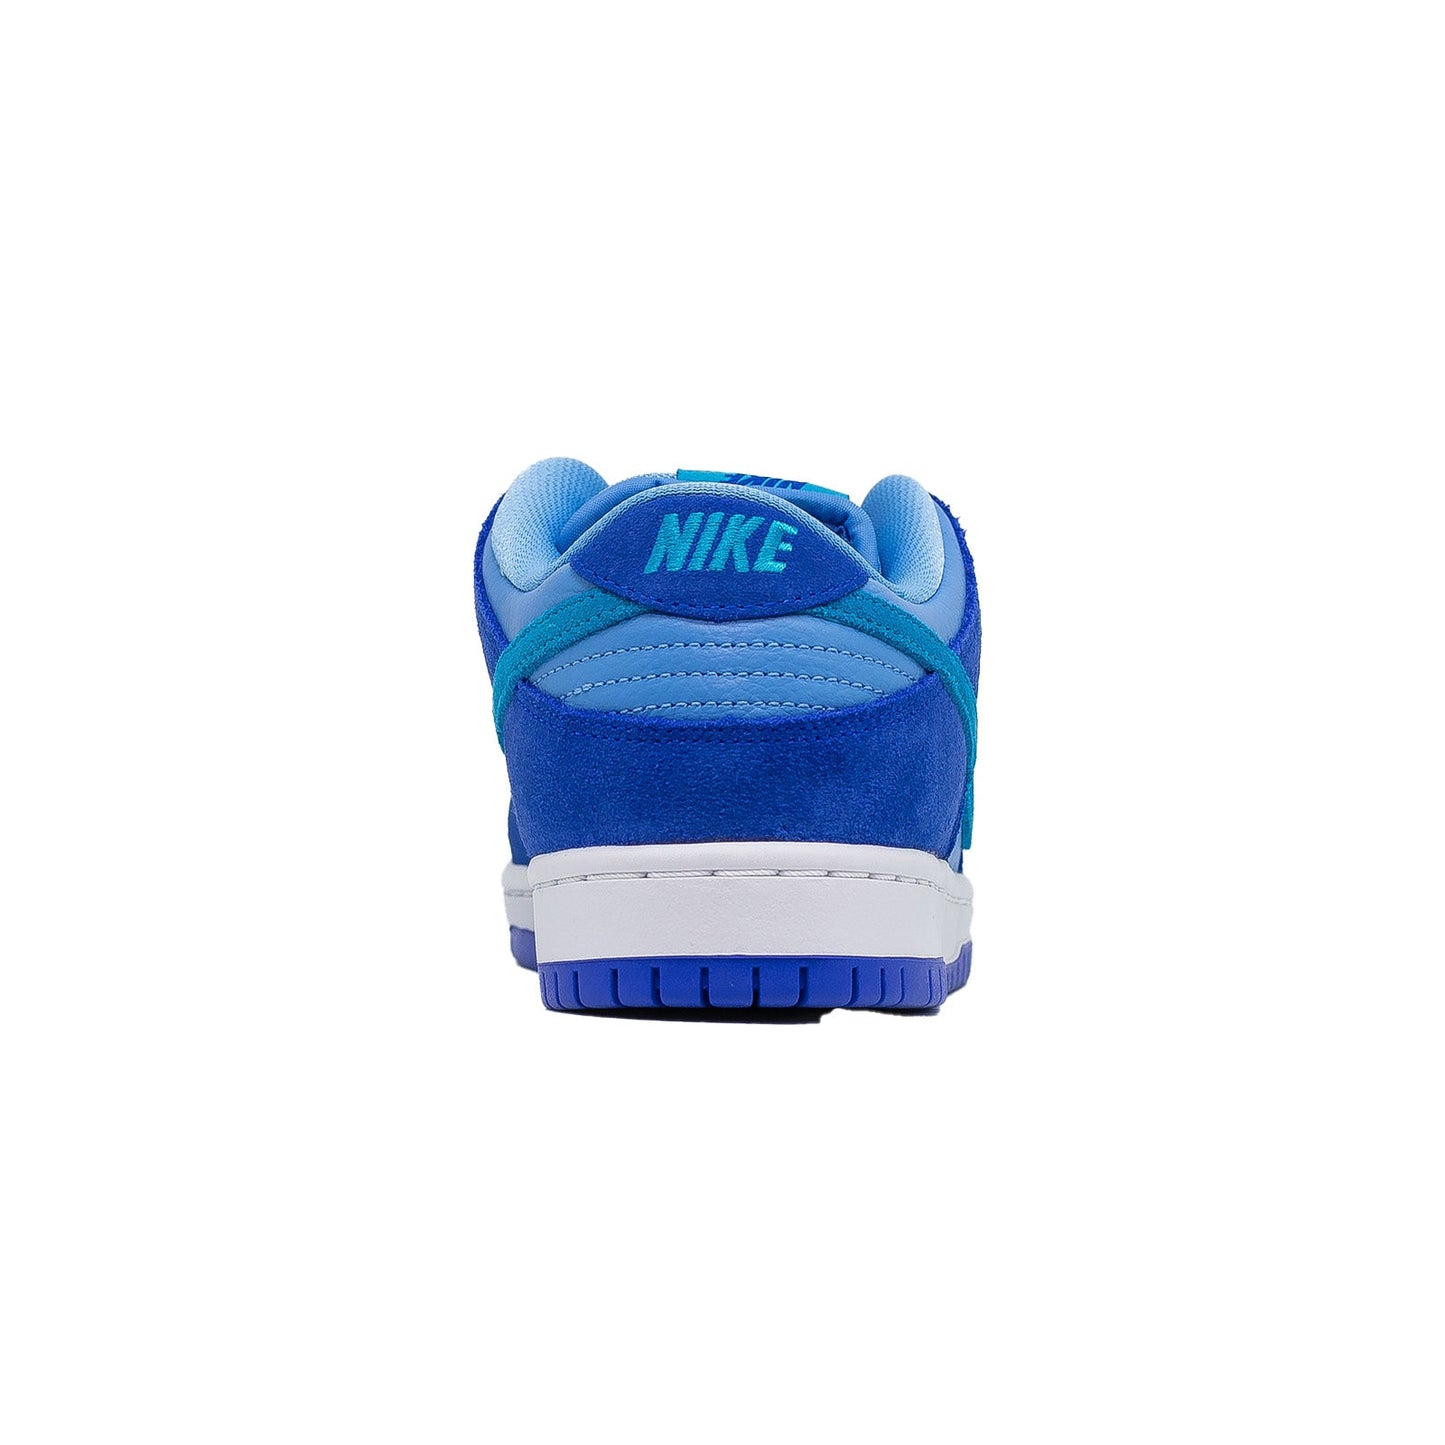 NikeSBDunkLow FruityPack BlueRaspberry2 1445x